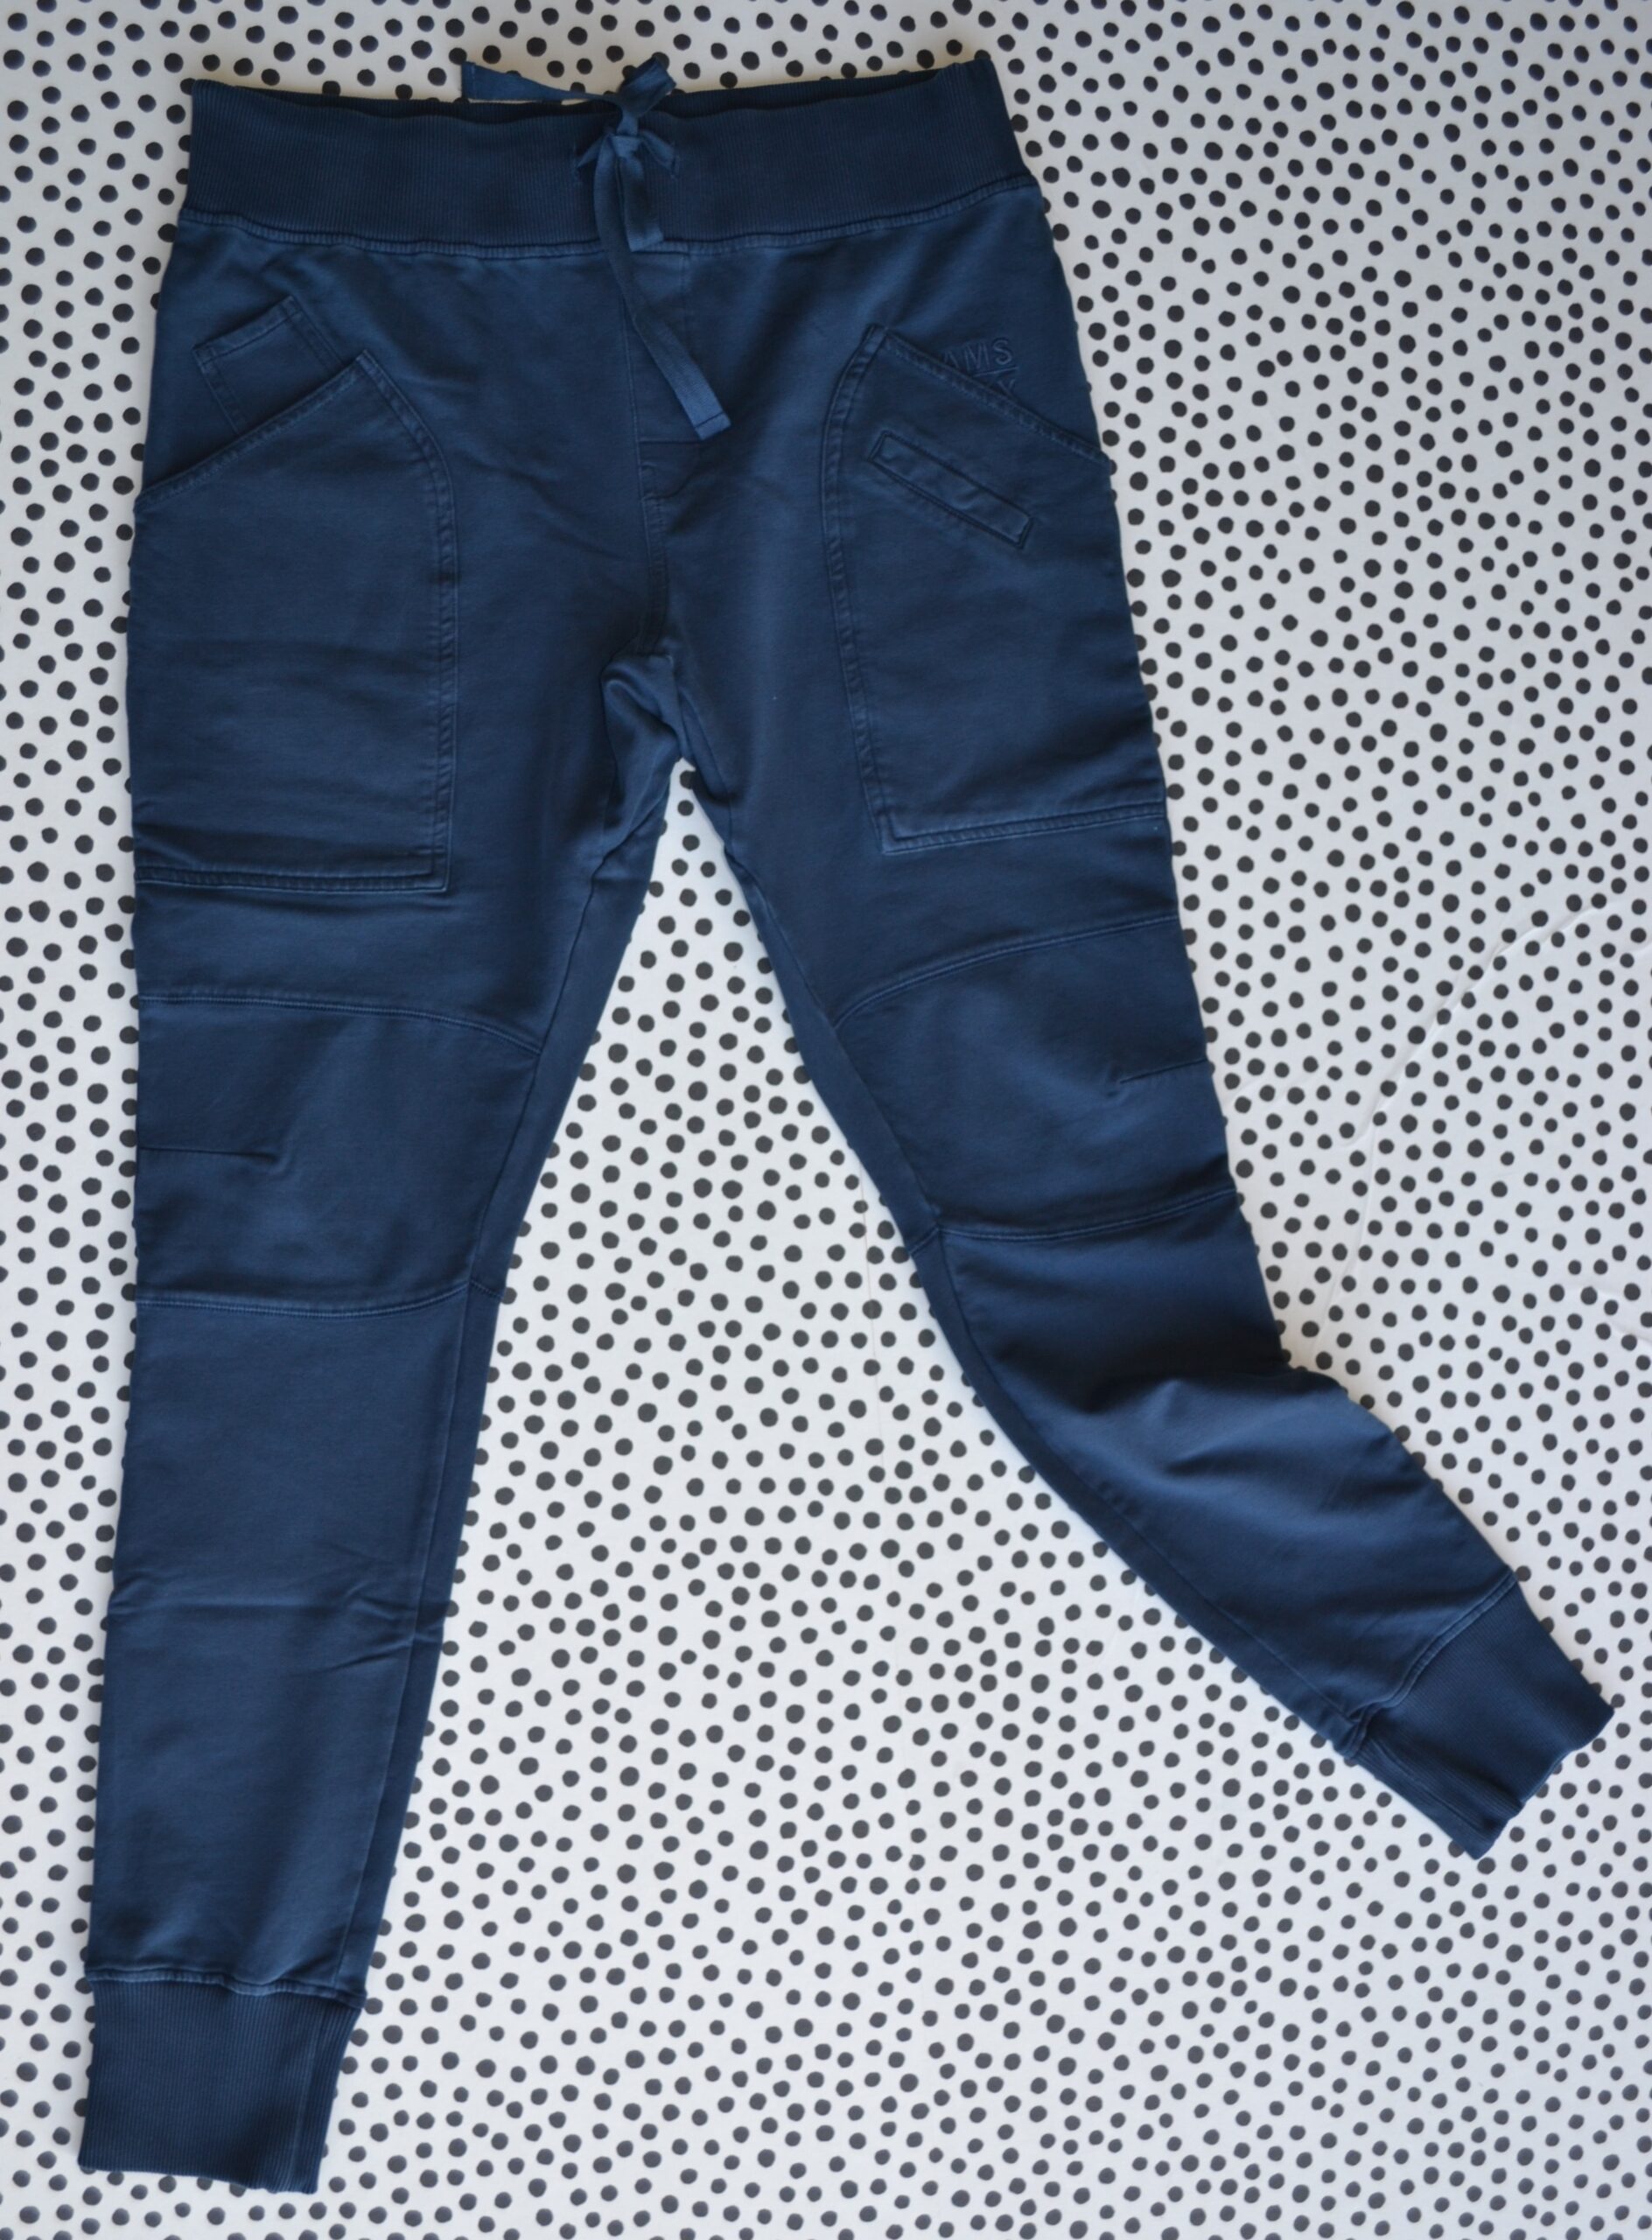 Custom P&P comfort pants